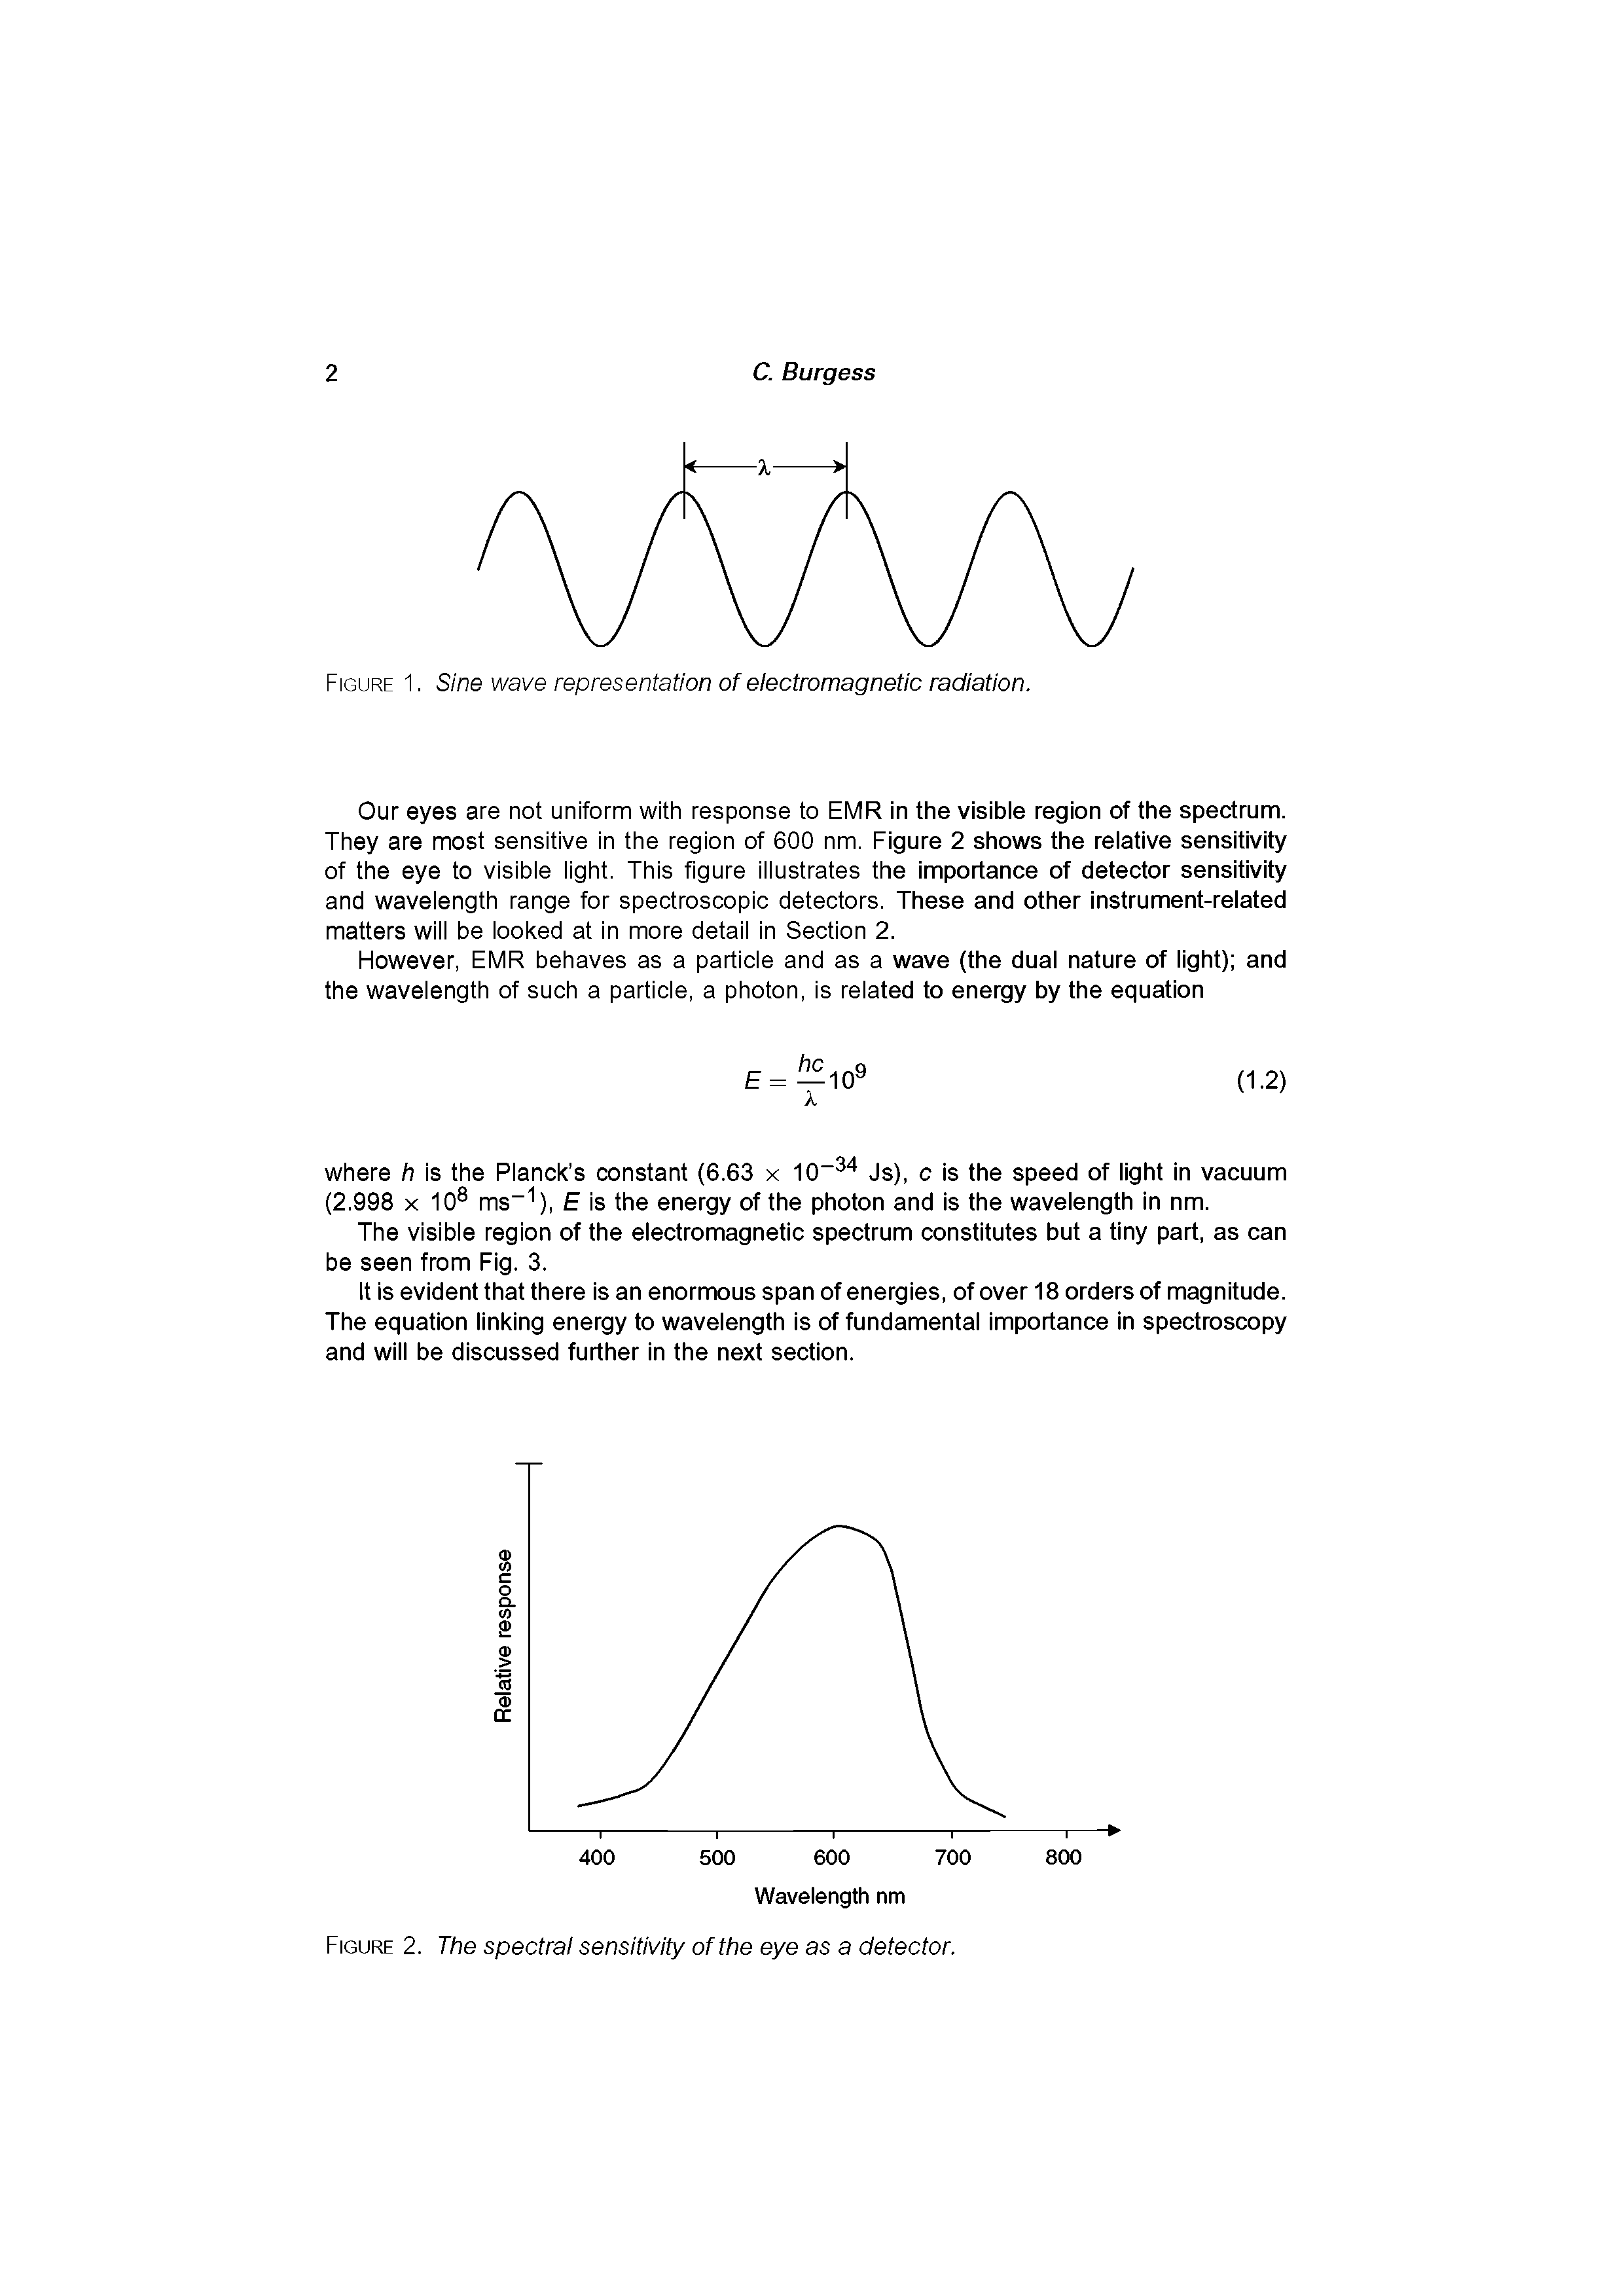 Figure 1. Sine wave representation of electromagnetic radiation.